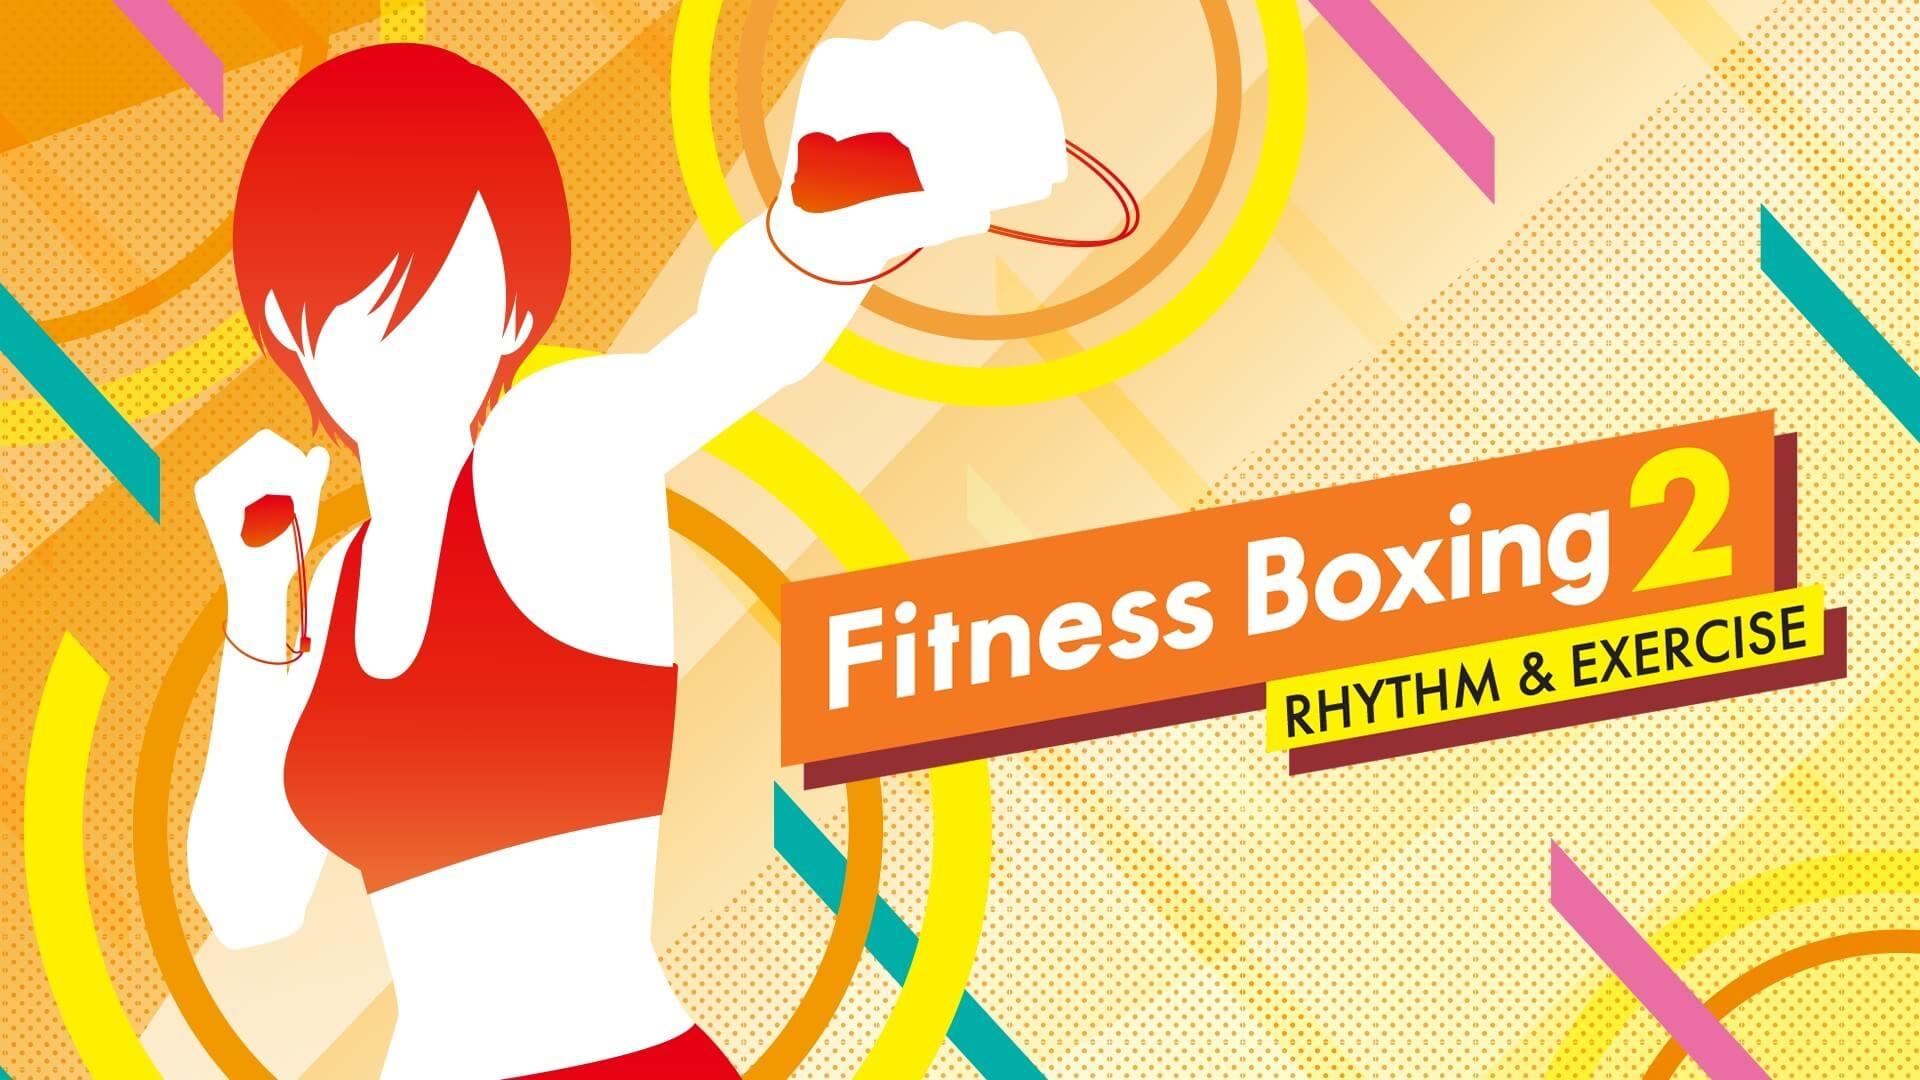 Fitnessboxing2 Illustration